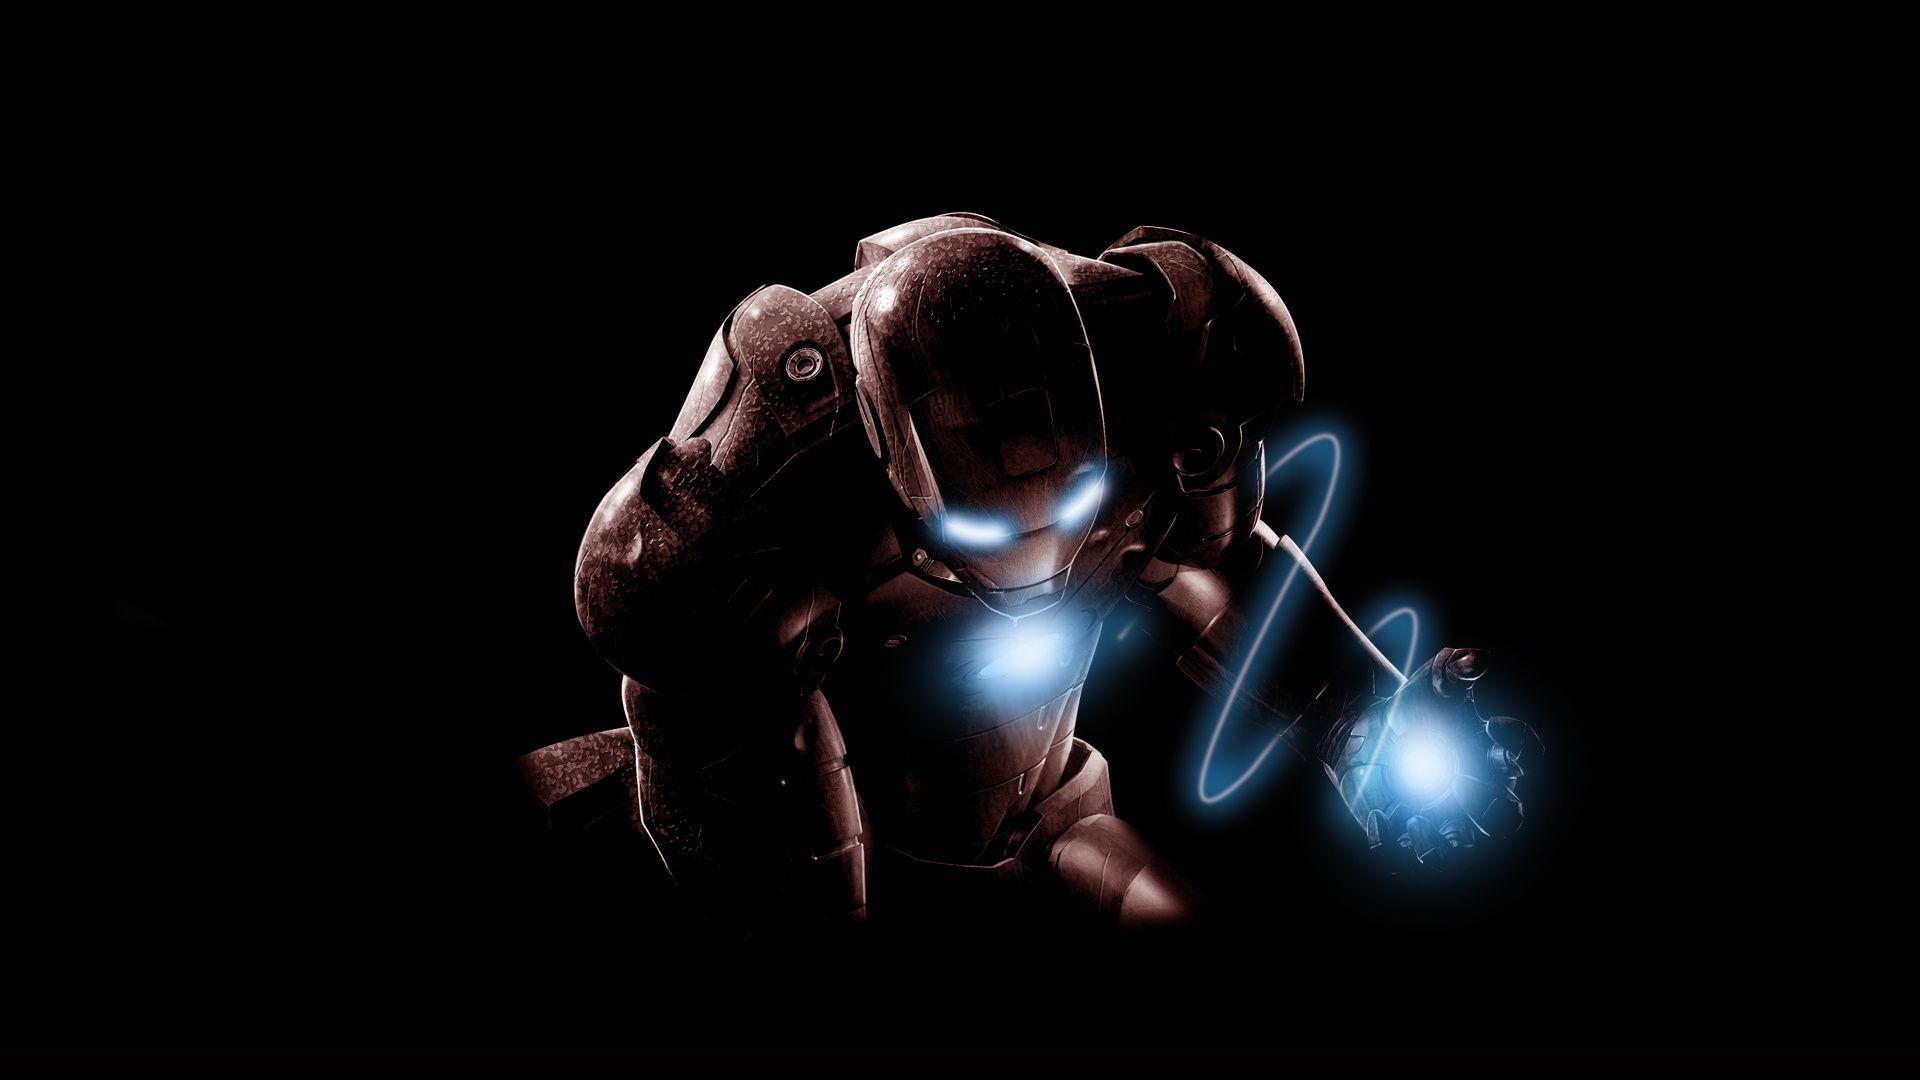 Image for Elegant Iron Man HD Wallpaper. Stuff to Buy